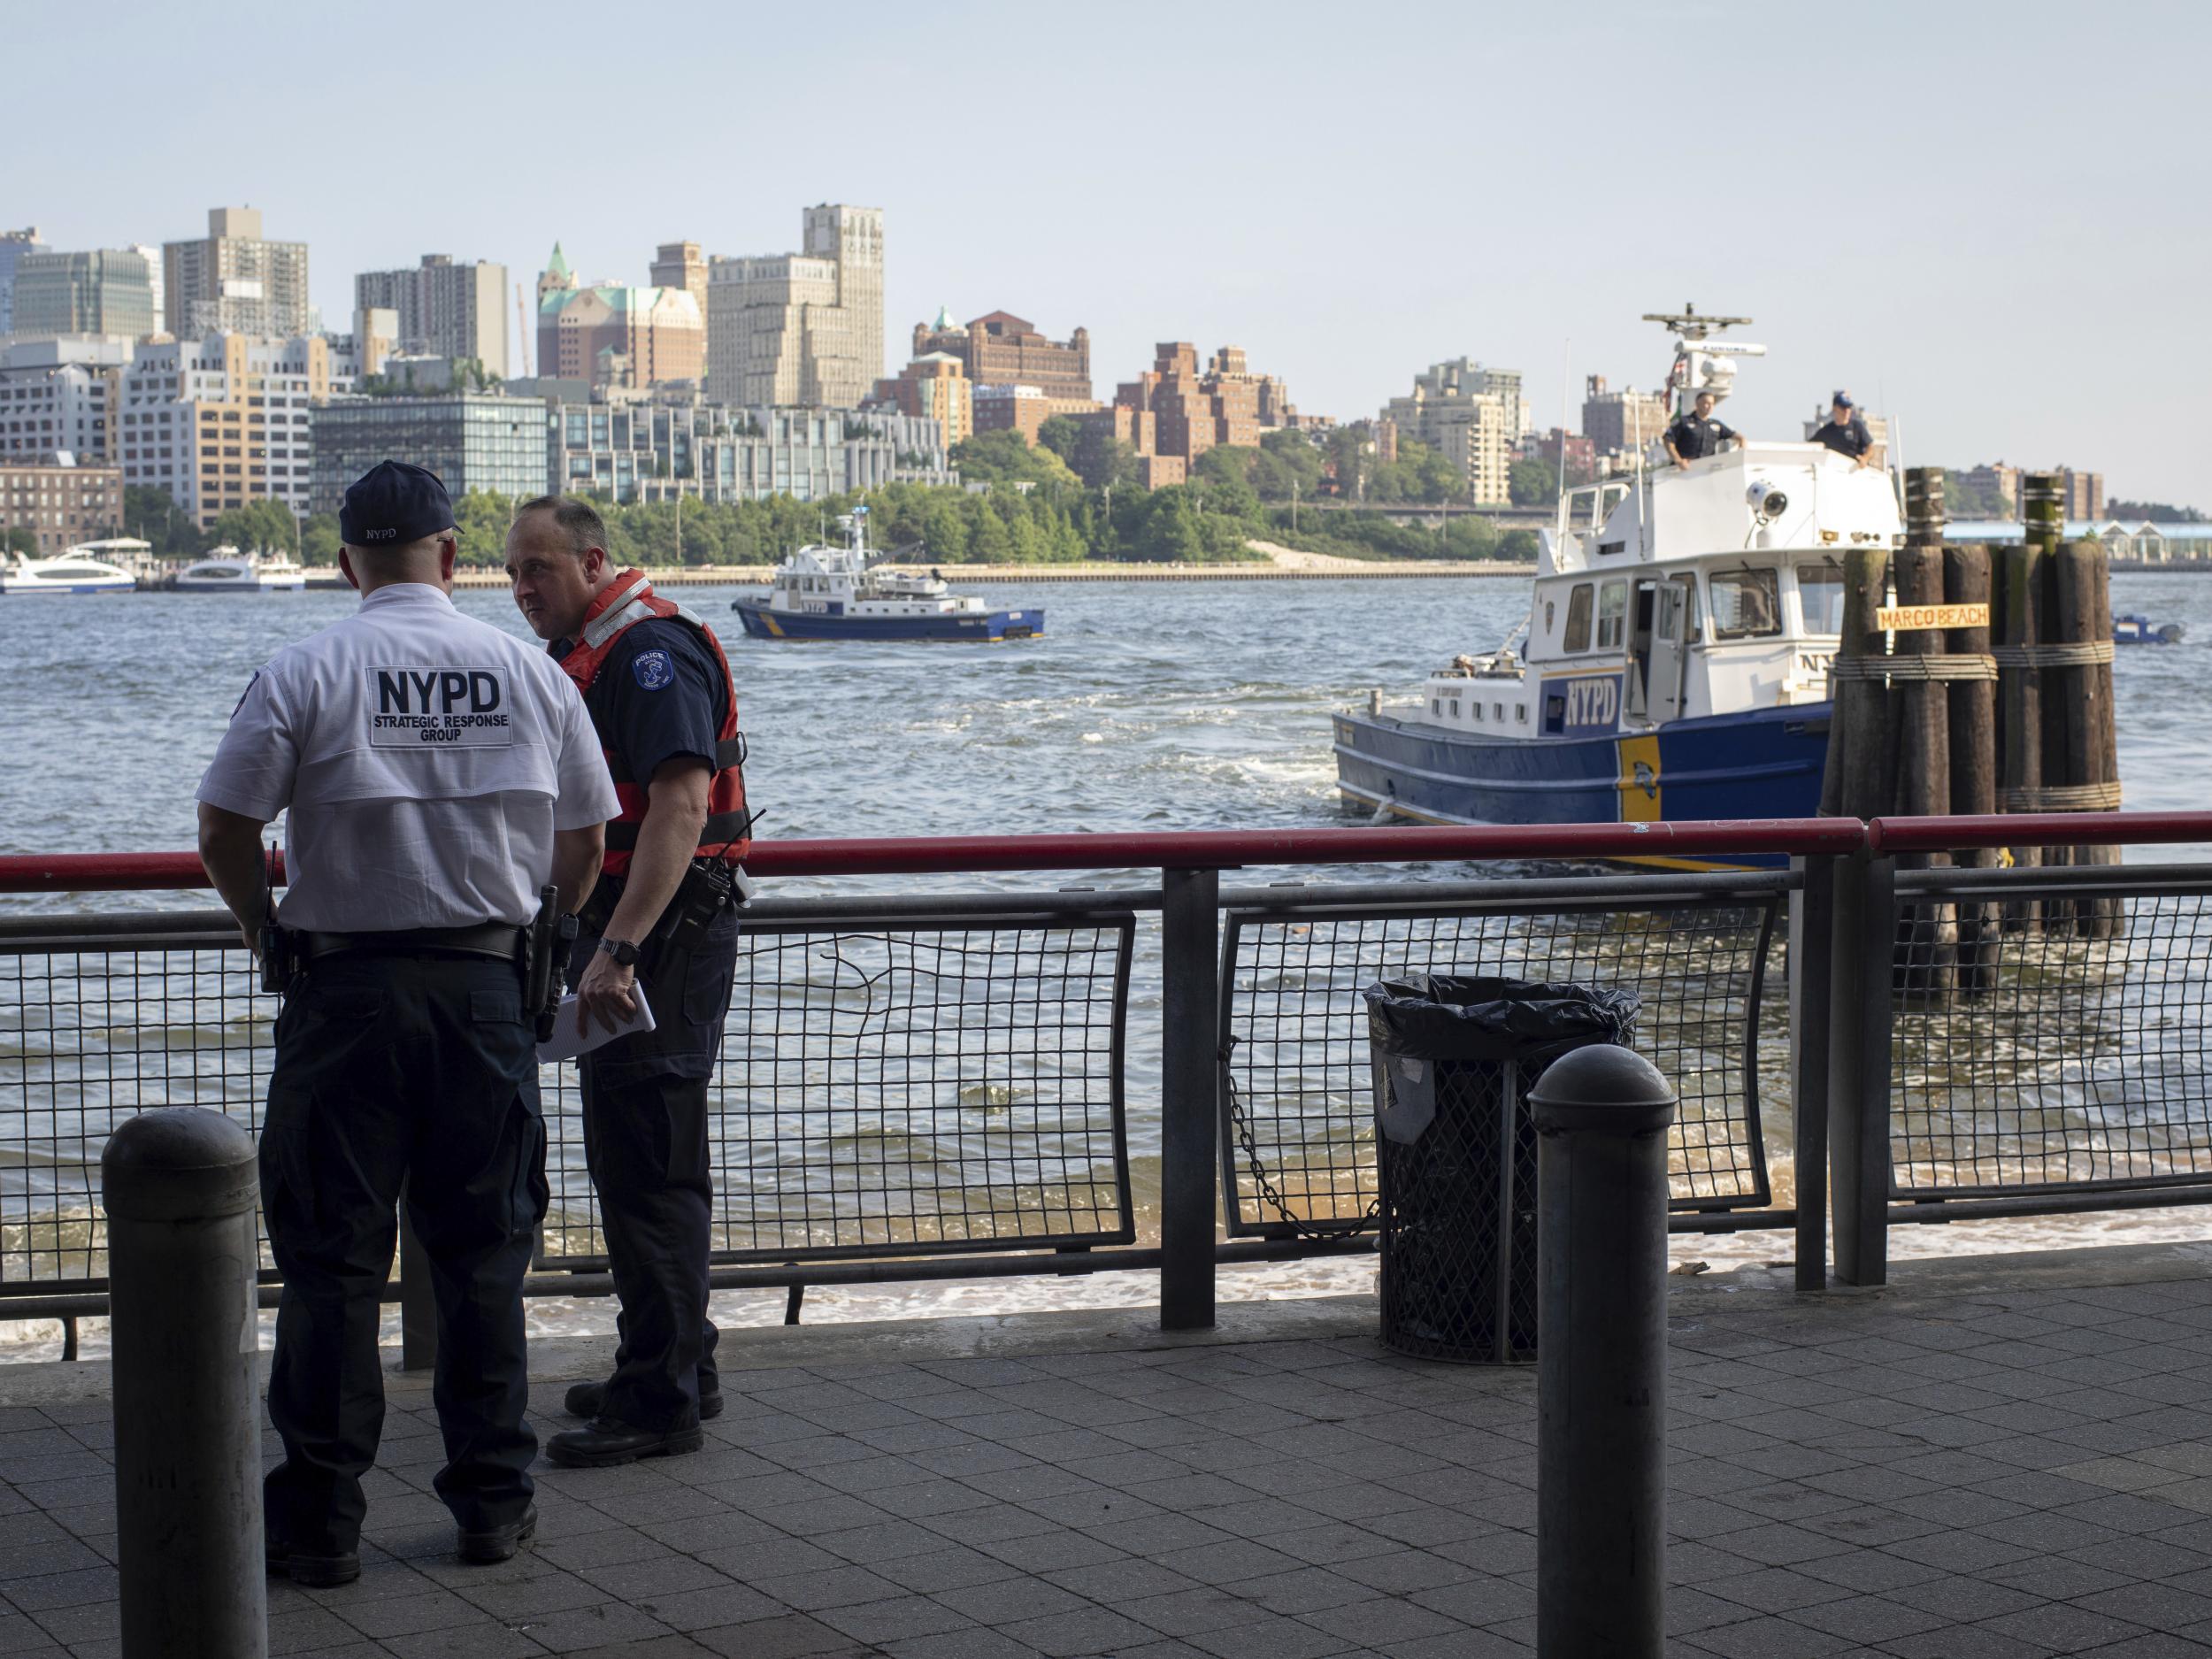 Dead baby found in water beneath New York 's Brooklyn Bridge